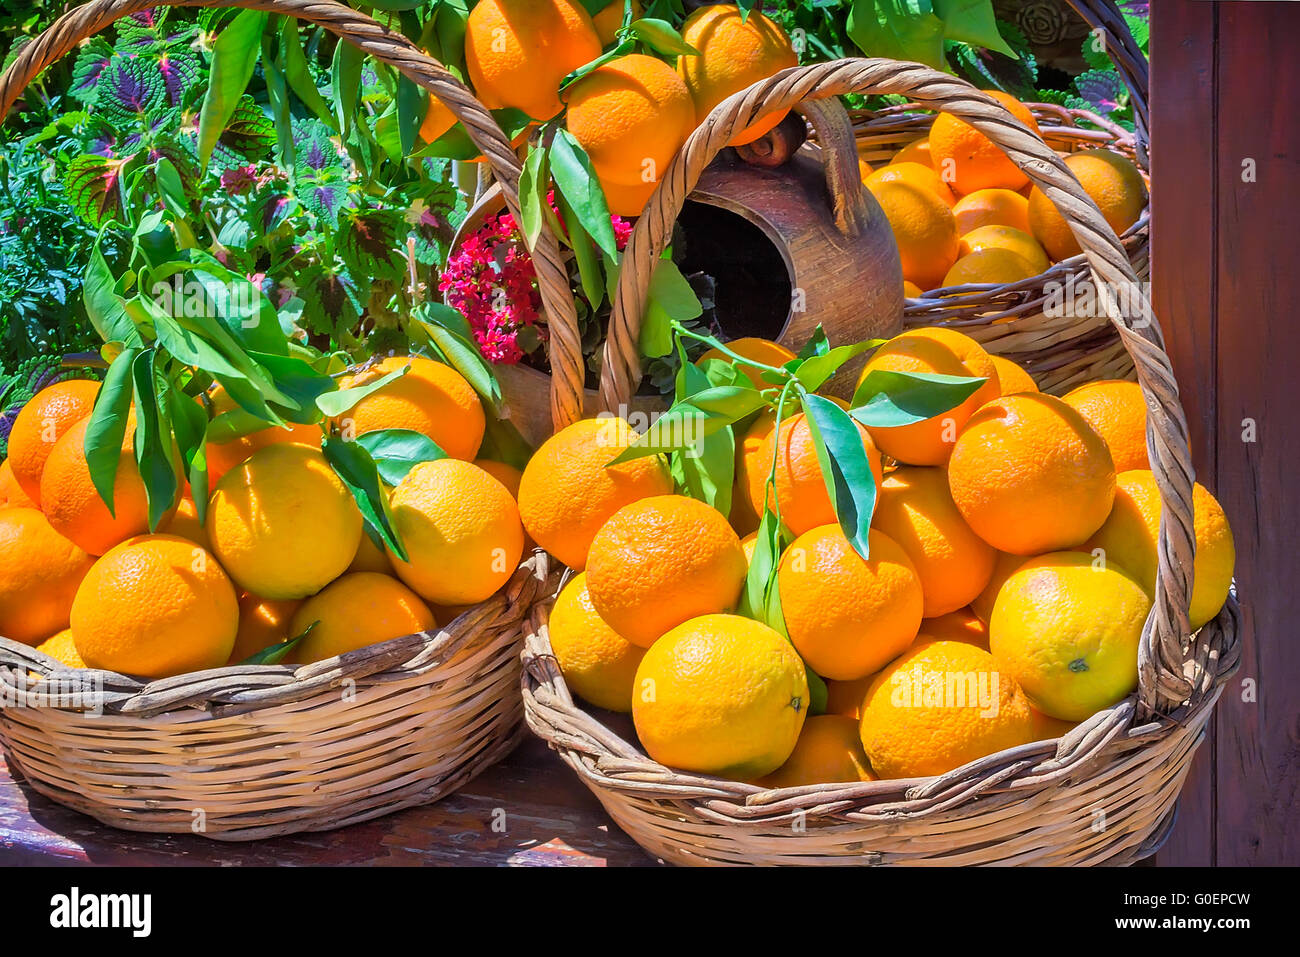 Ripe large oranges in a wicker basket Stock Photo